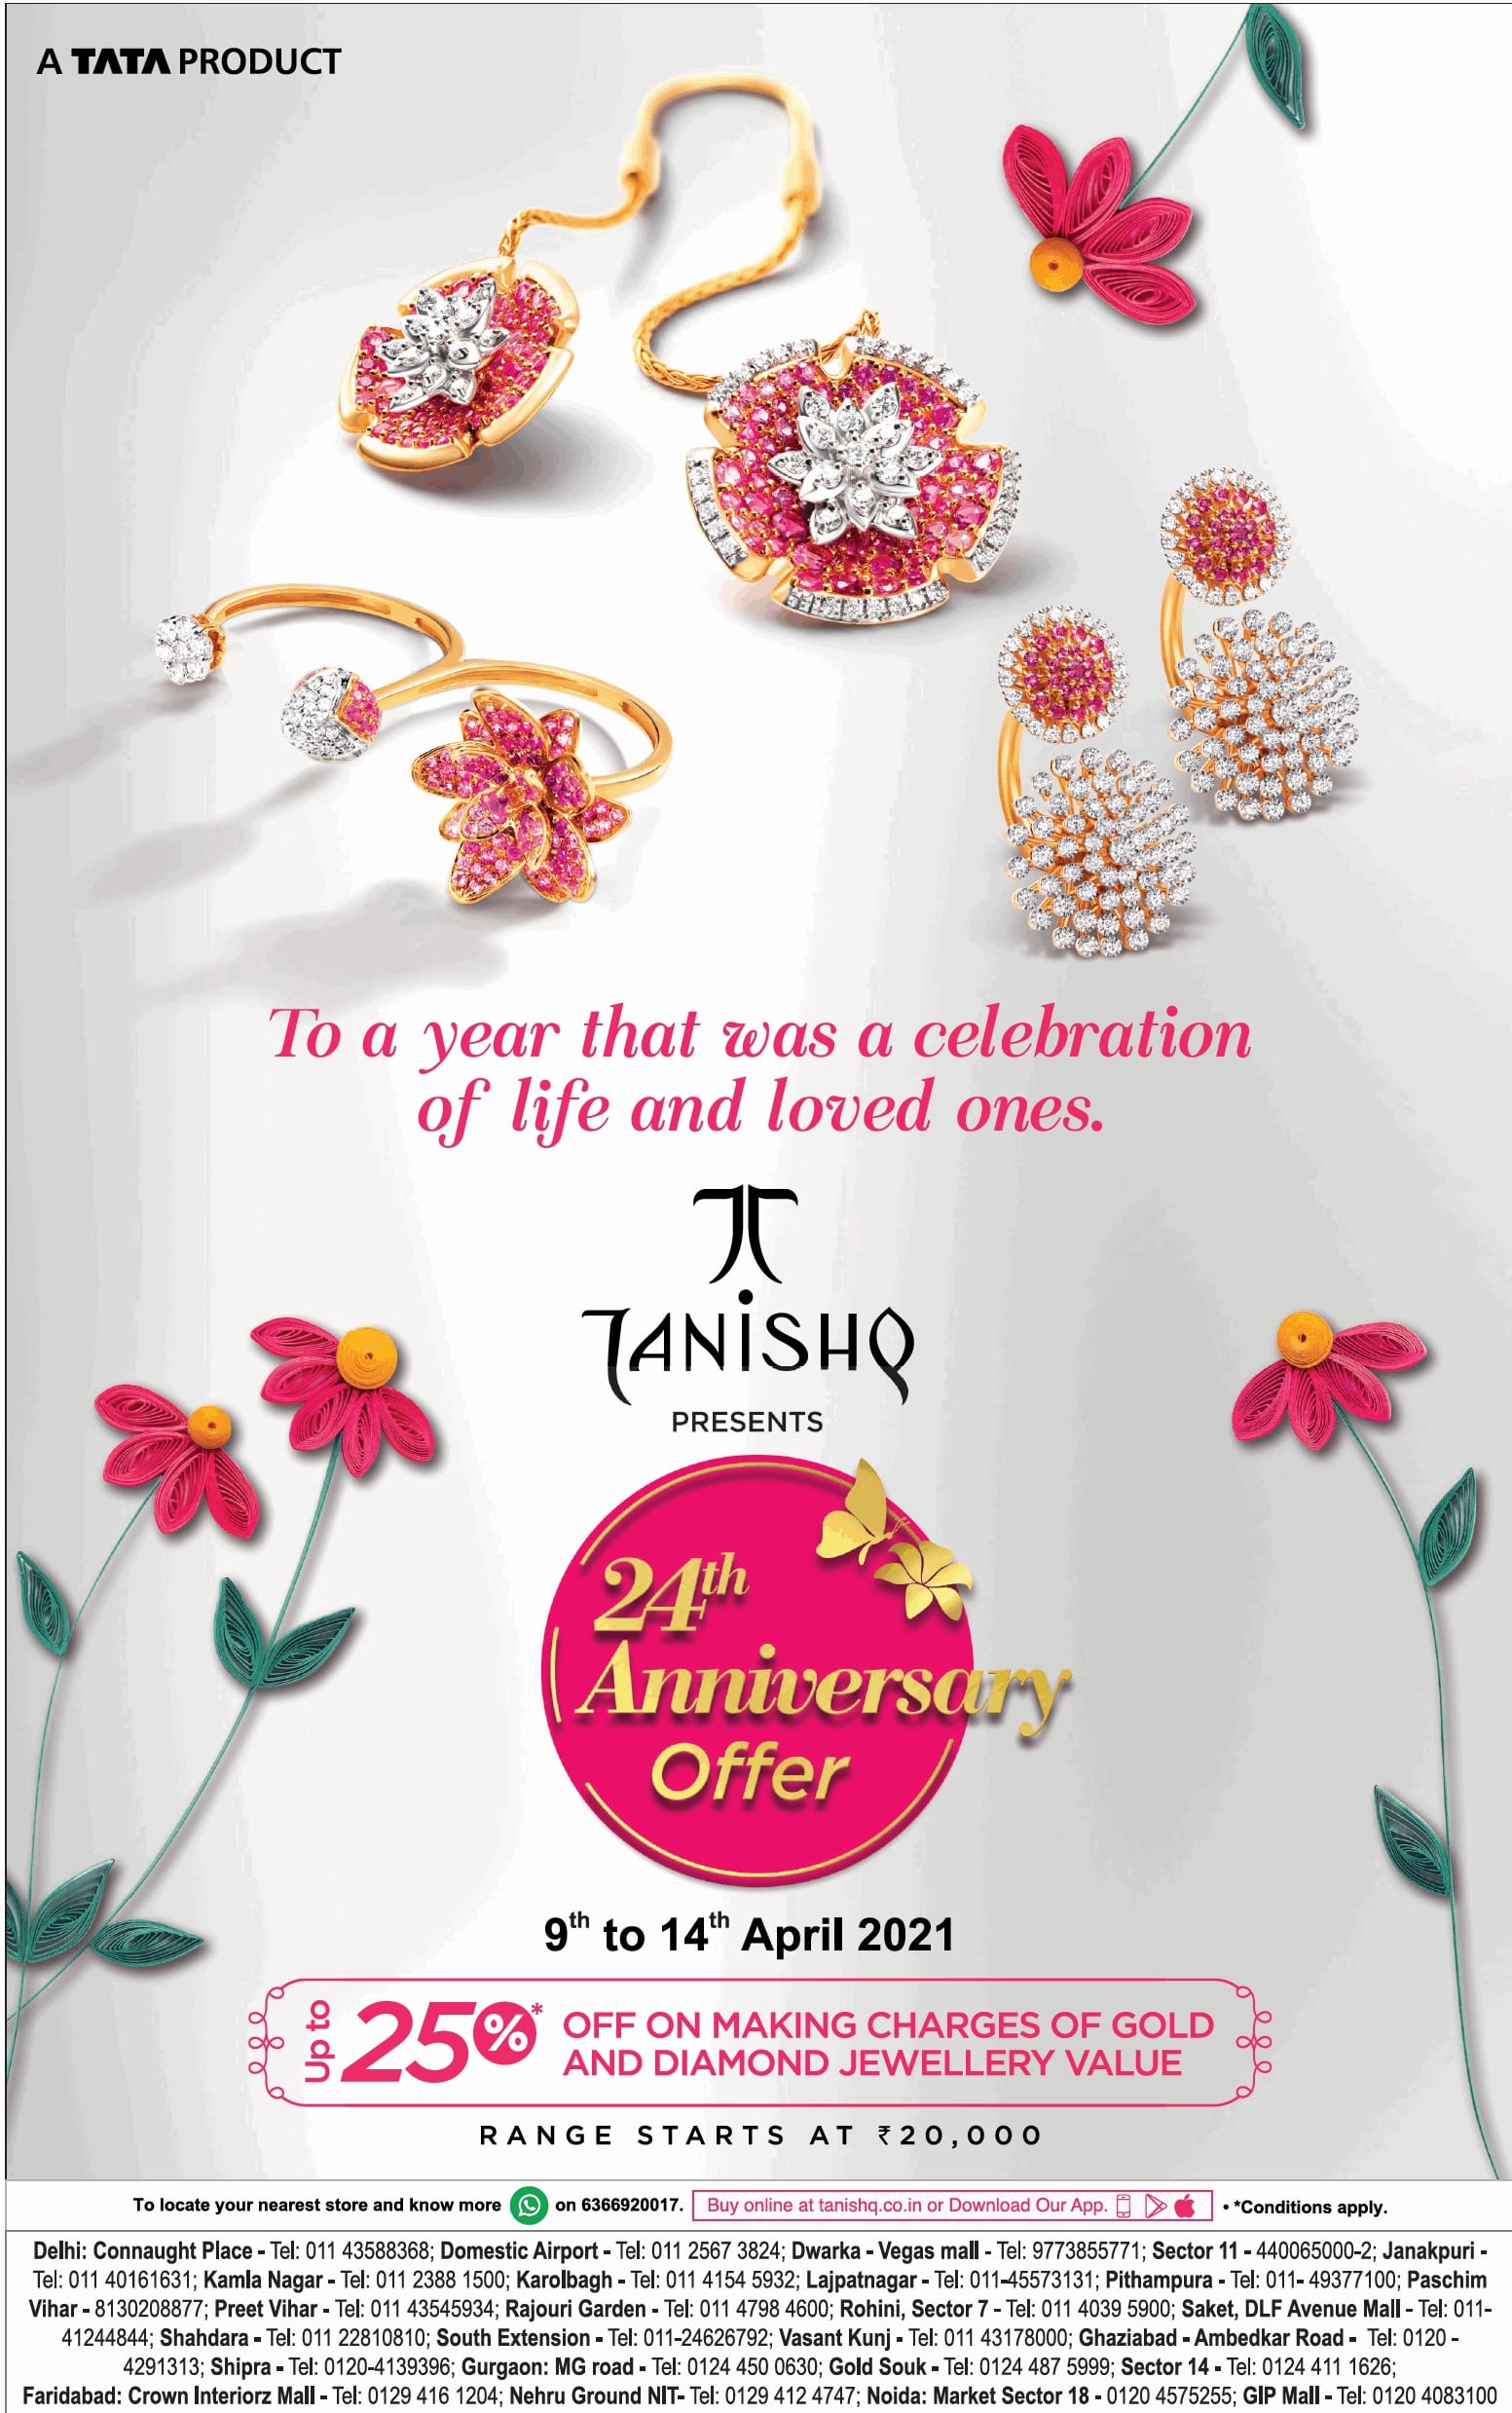 a-tata-product-tanish-presents-24th-anniversary-offer-ad-delhi-times-11-04-2021